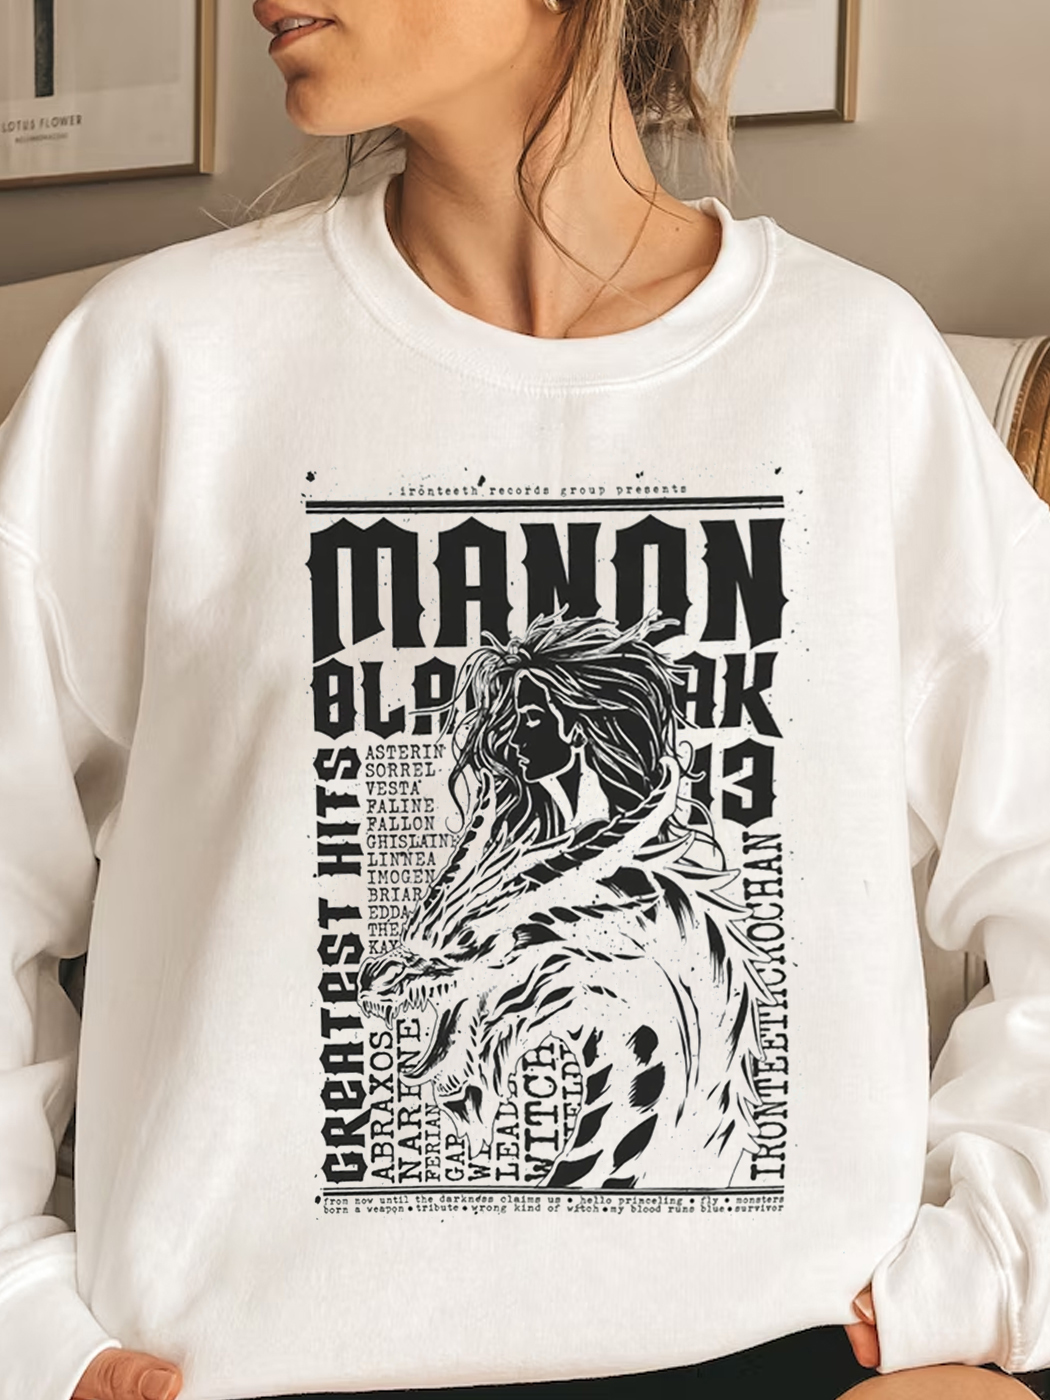 Women's Manon Blackbeak Greatest Hits Concert Sweatshirt